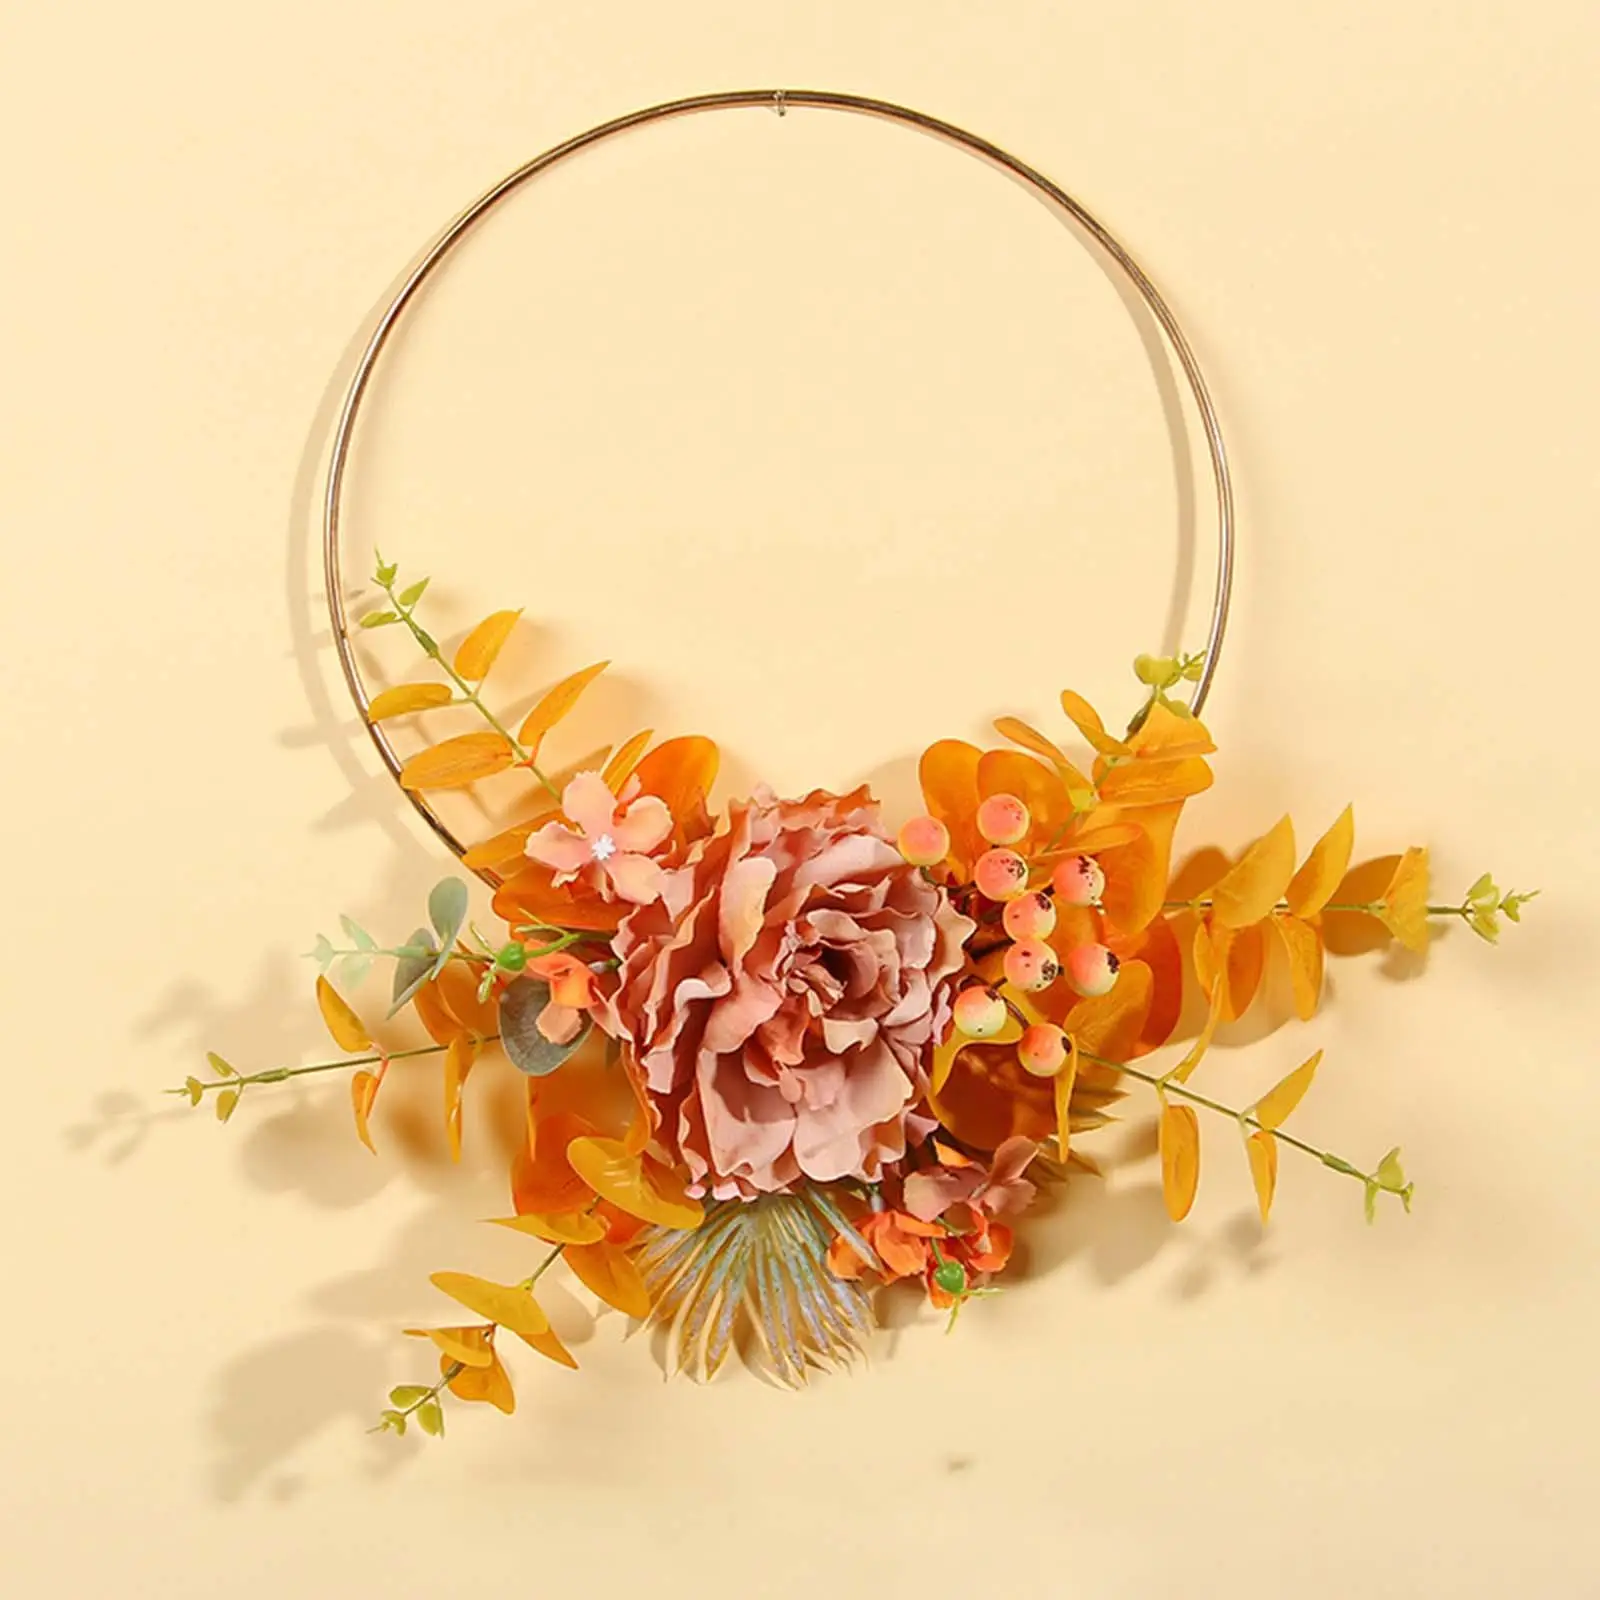 Iron Metal Ring Hoop Garland Wedding Floral Wreath Handmade Flower Metal Hoop Decor Birthday Baby Shower Decoration